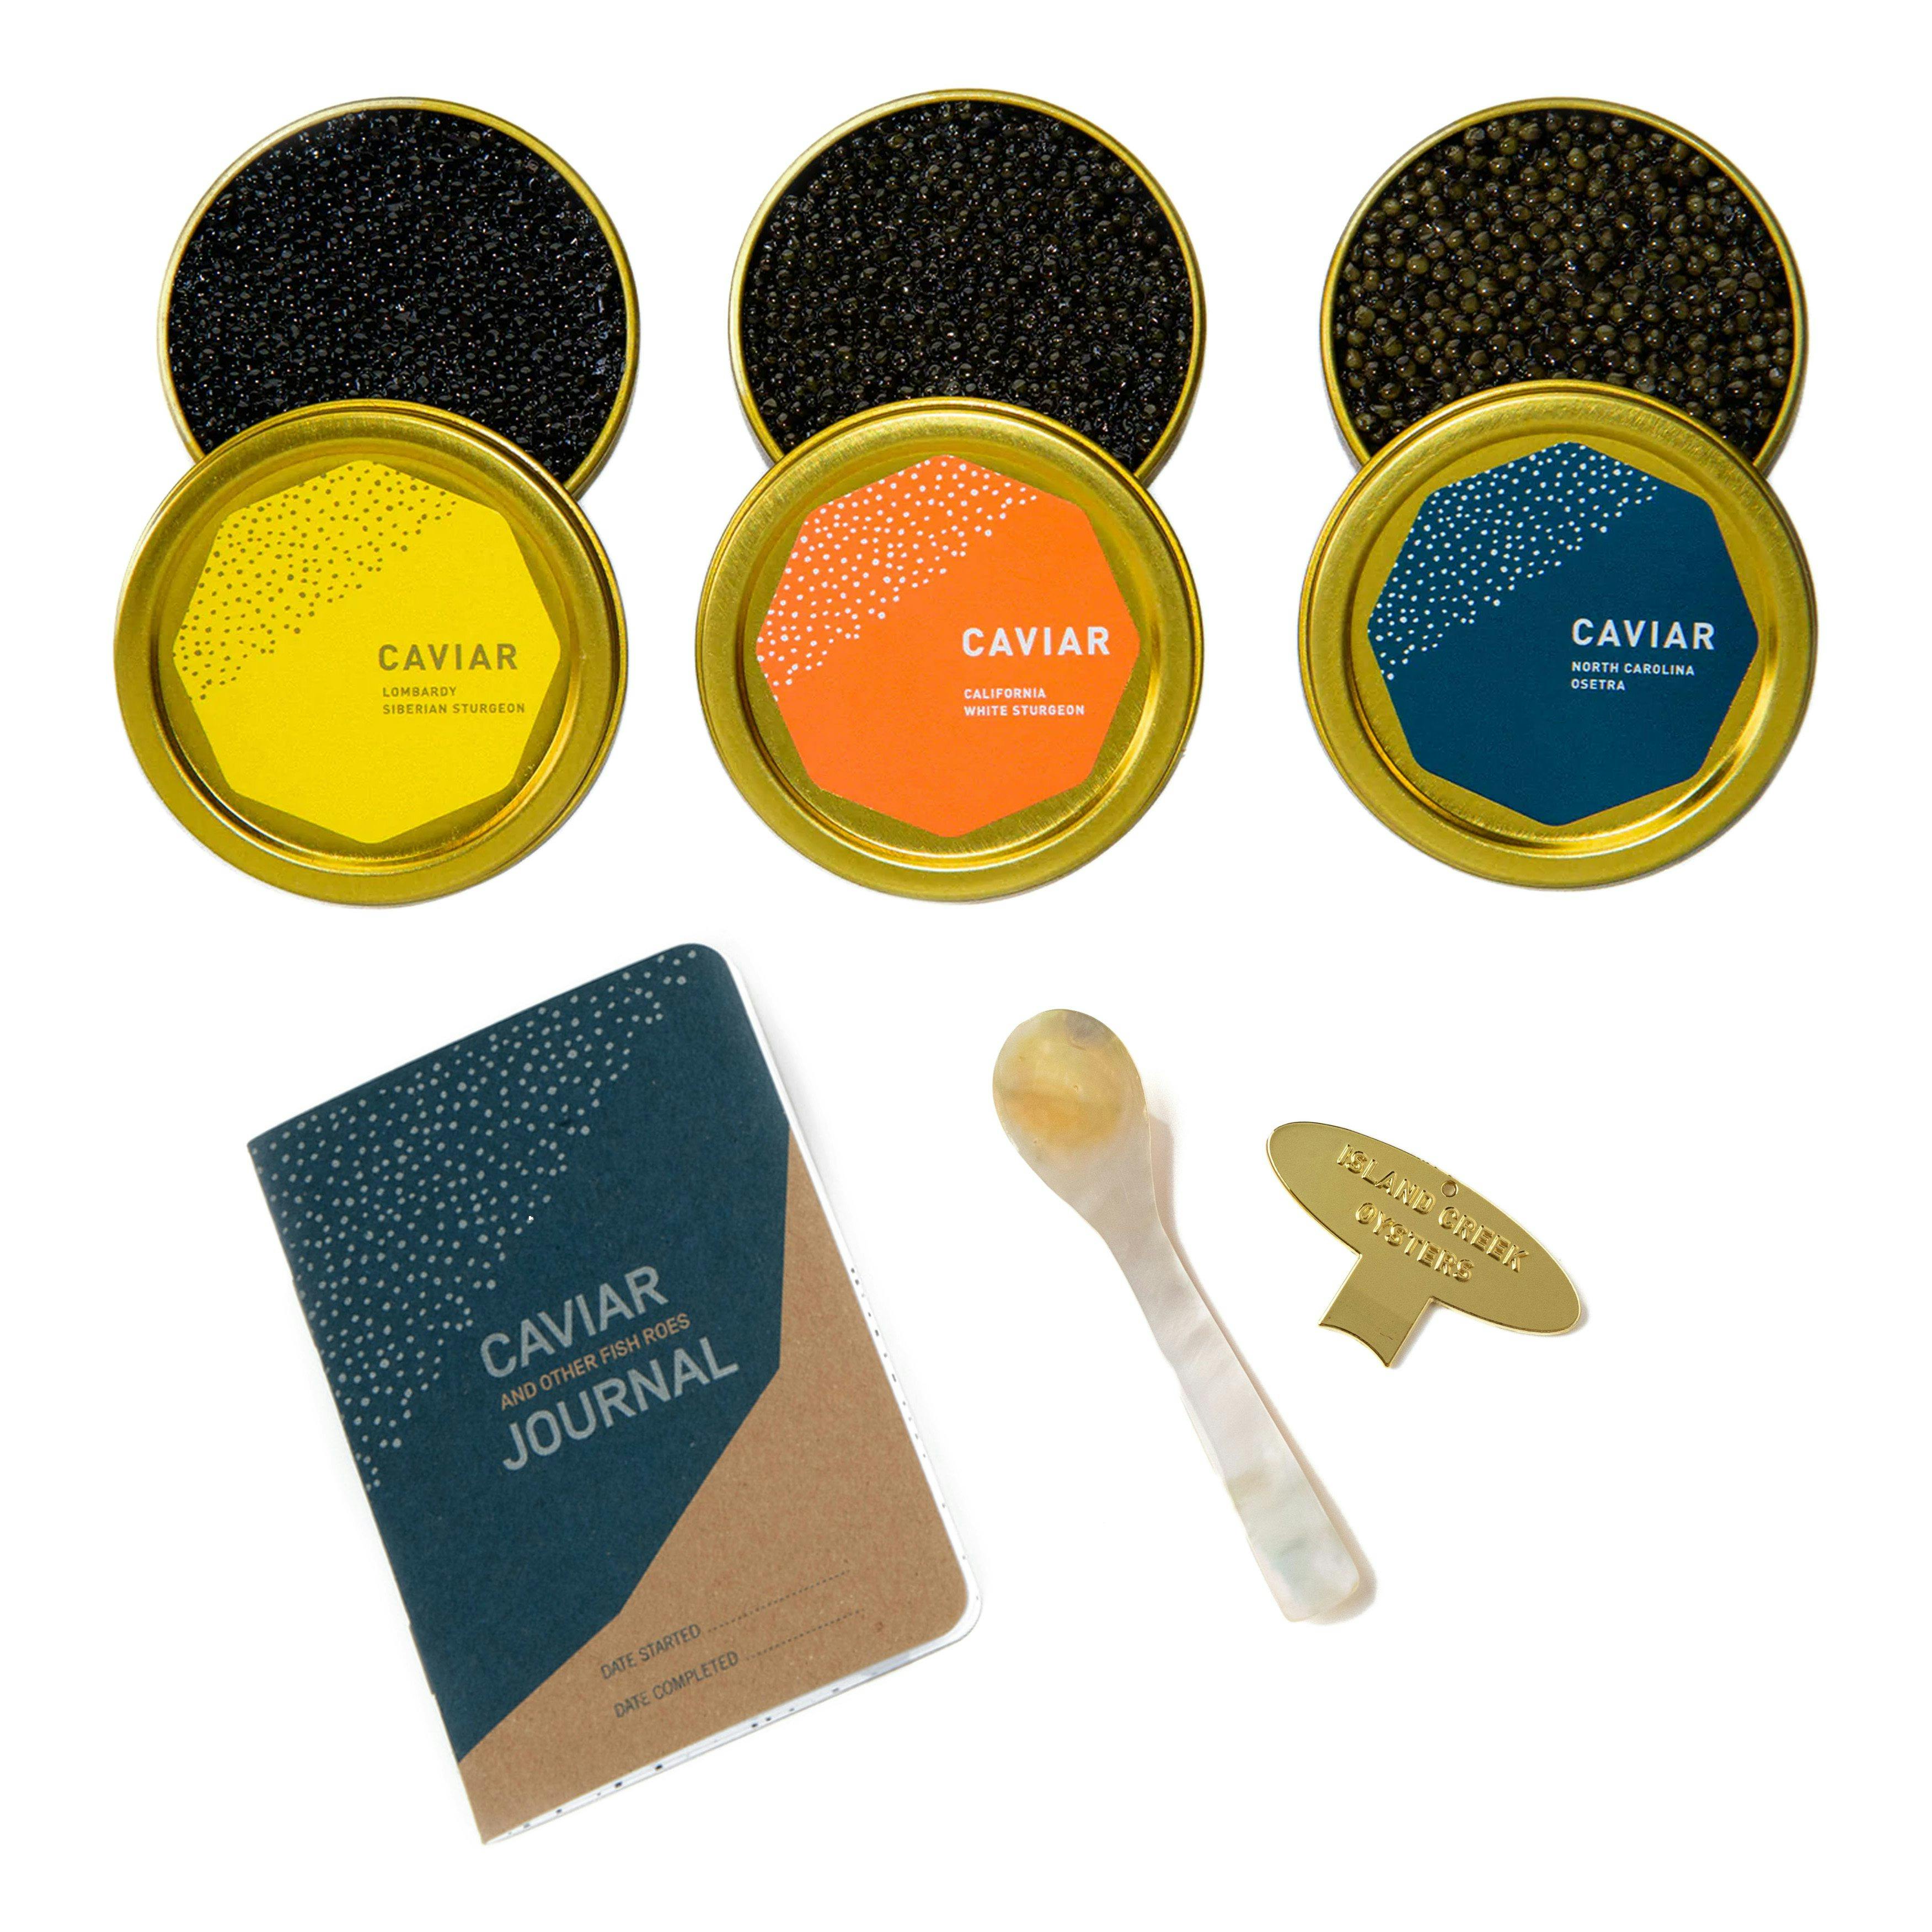 Huckberry Exclusive Caviar Tasting Experience